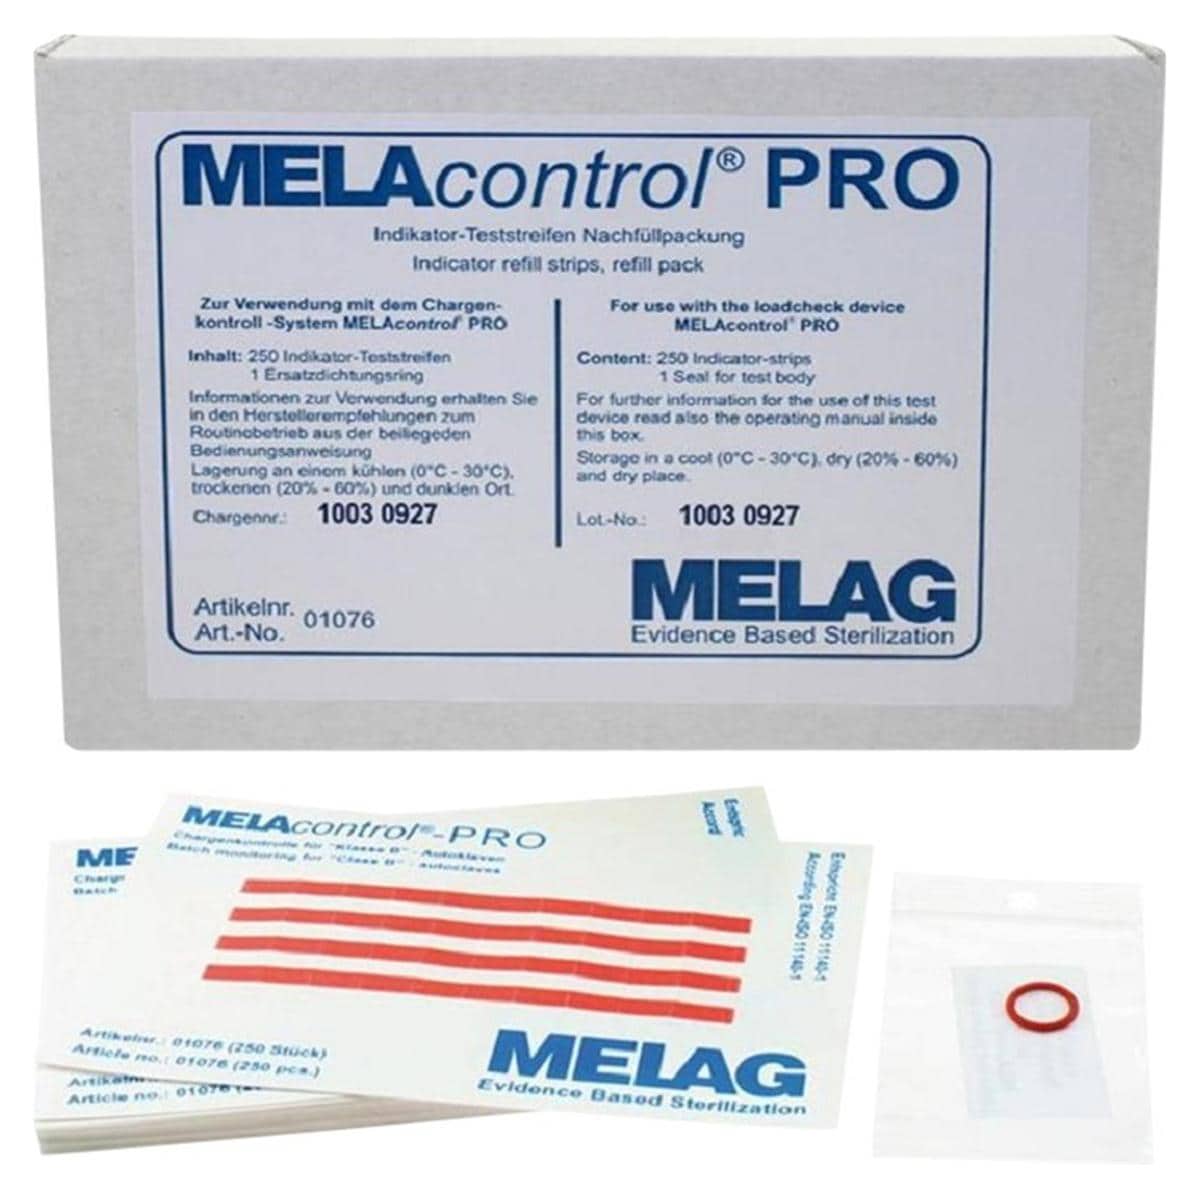 Melacontrol pro - Indicator teststrip navulling - Verpakking, 250 stuks